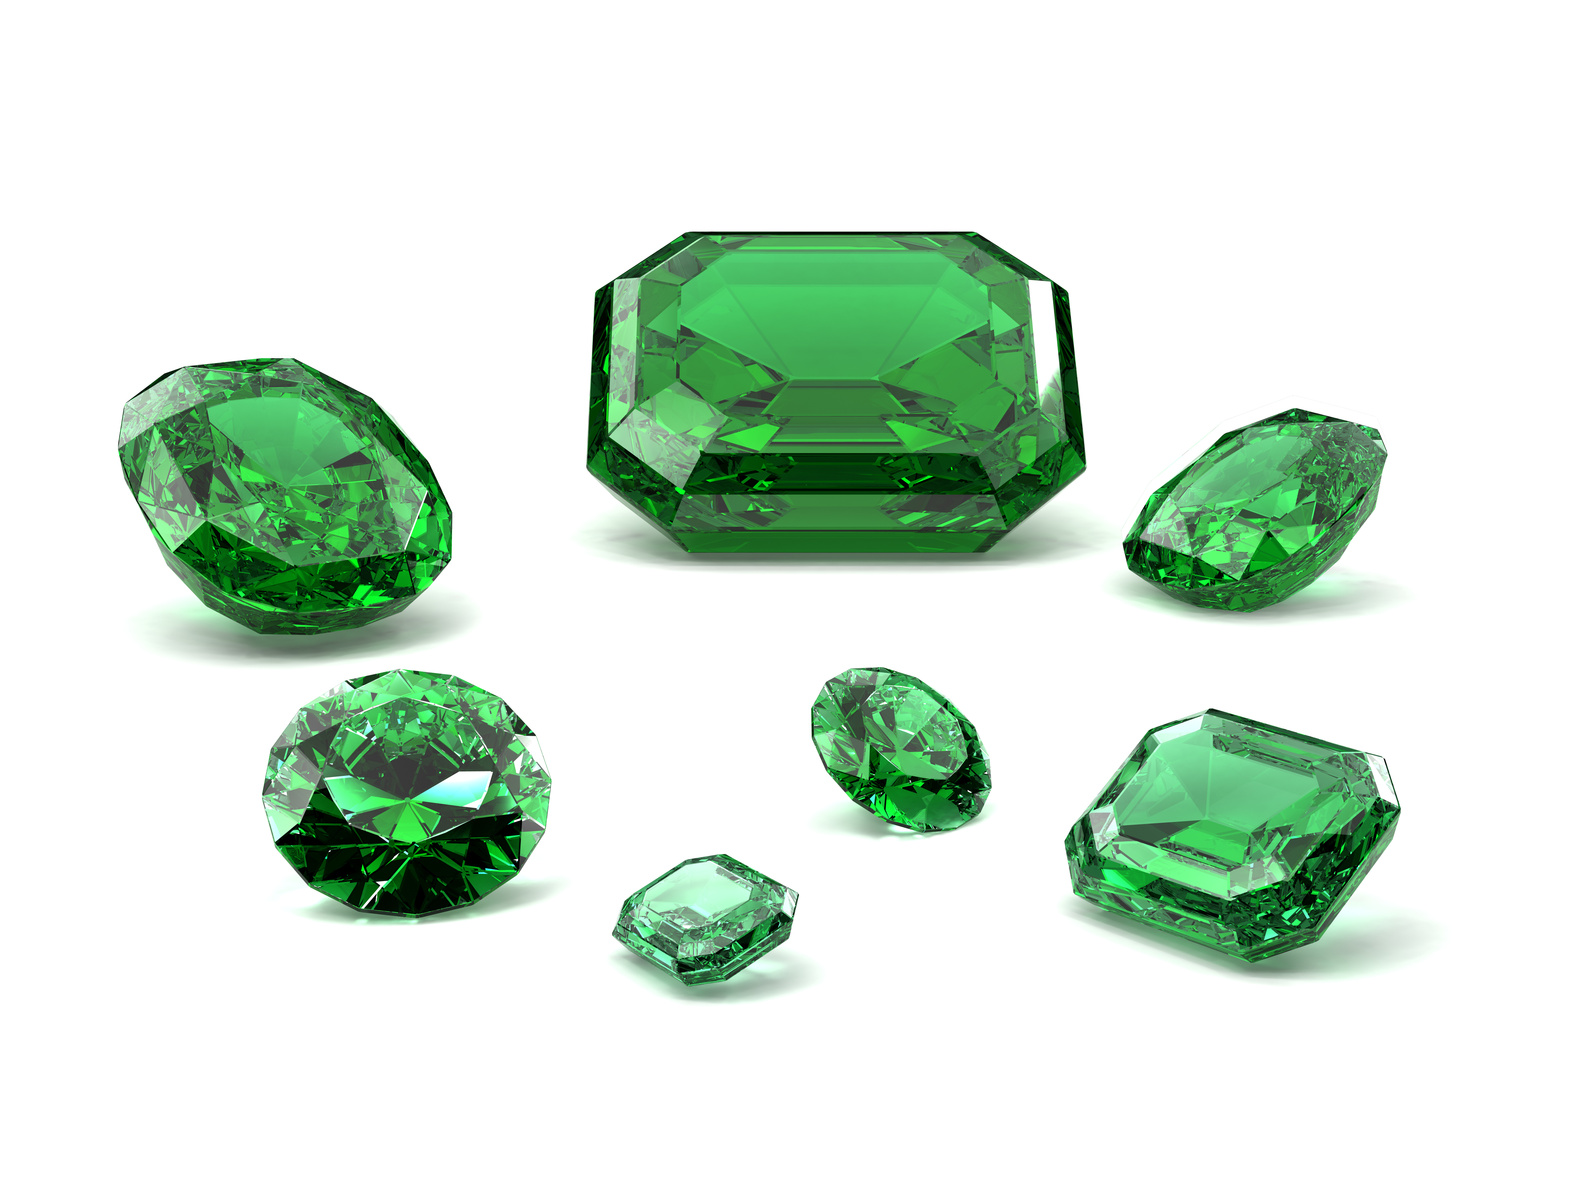 Taurus Birthstone The Emerald Stone That Would Improve Taurus's Lifestyle